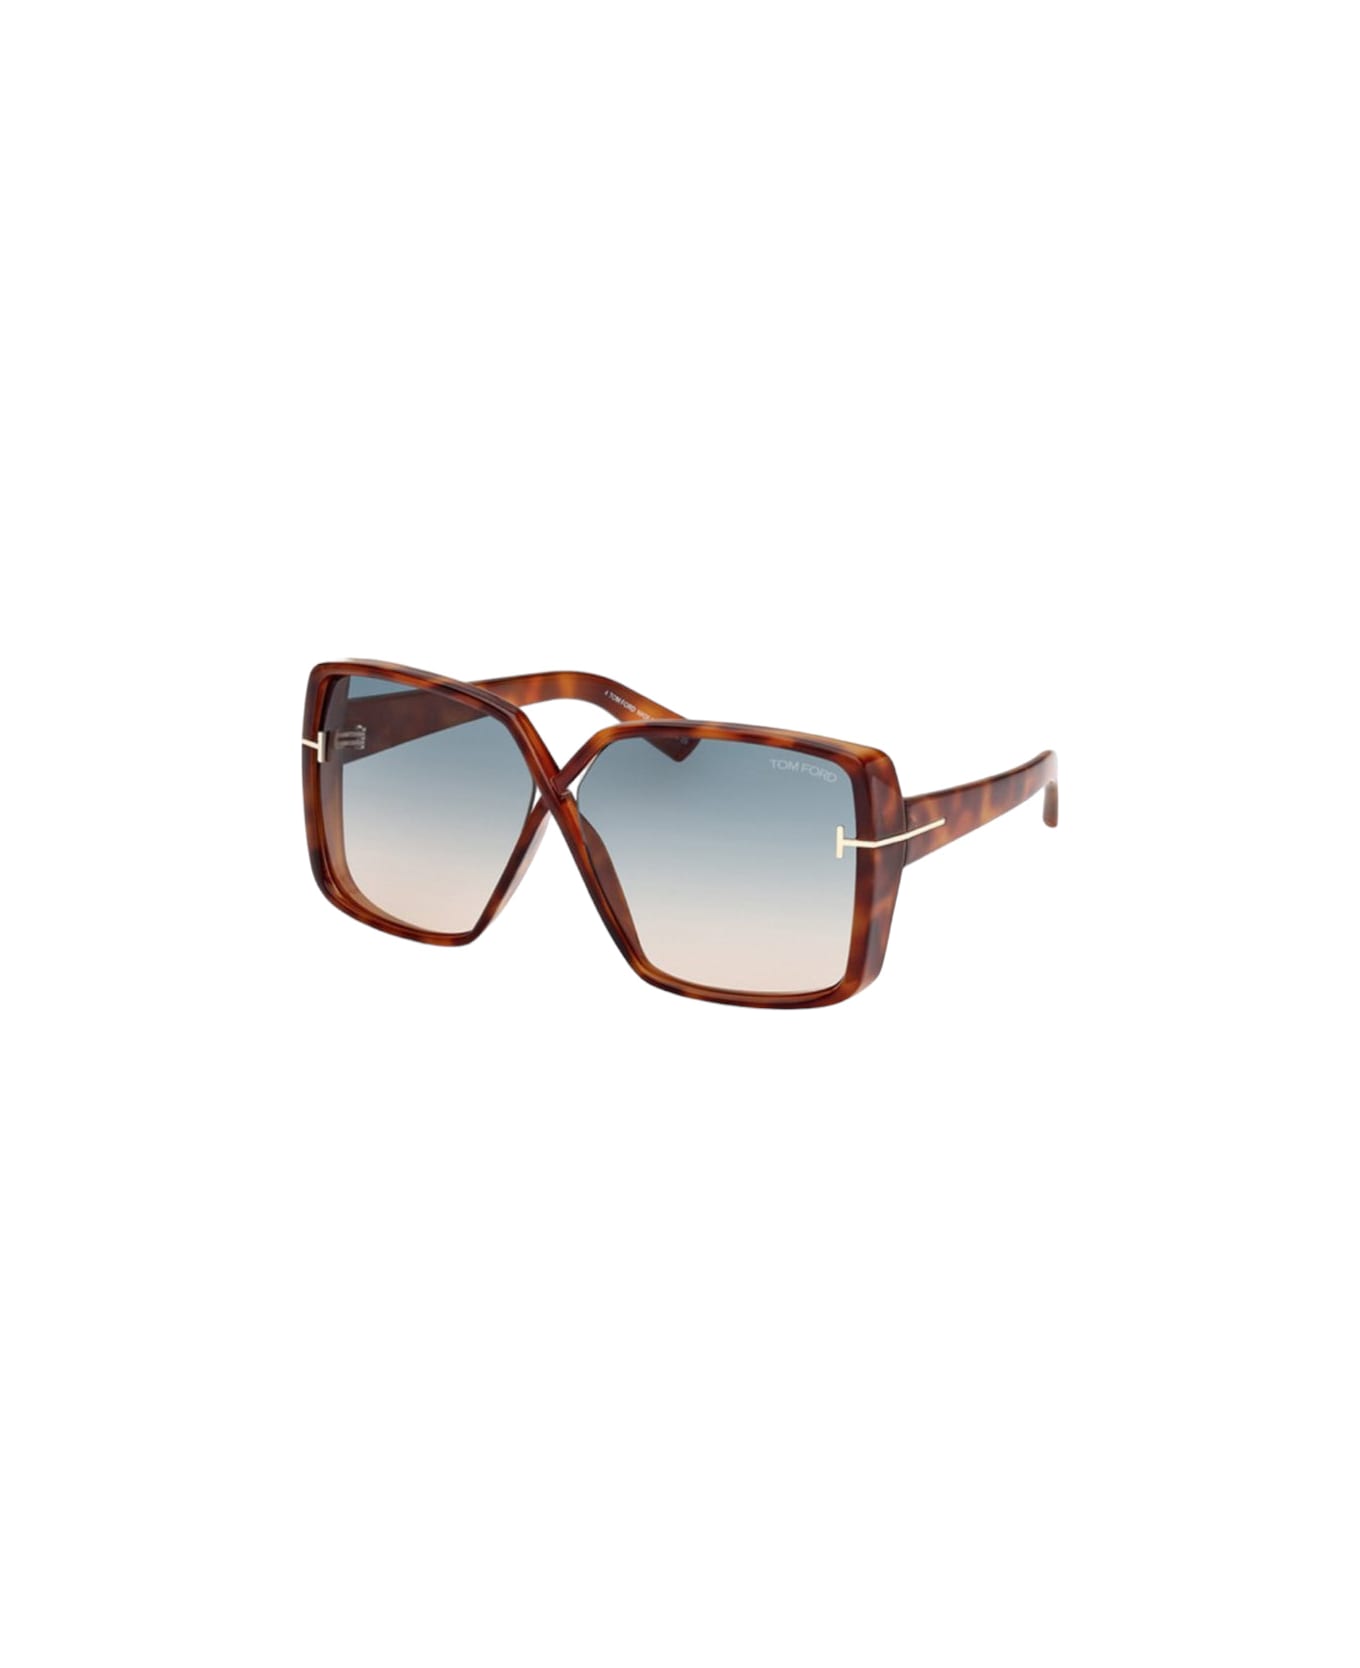 Tom Ford Eyewear Tf 1117 /s Sunglasses サングラス